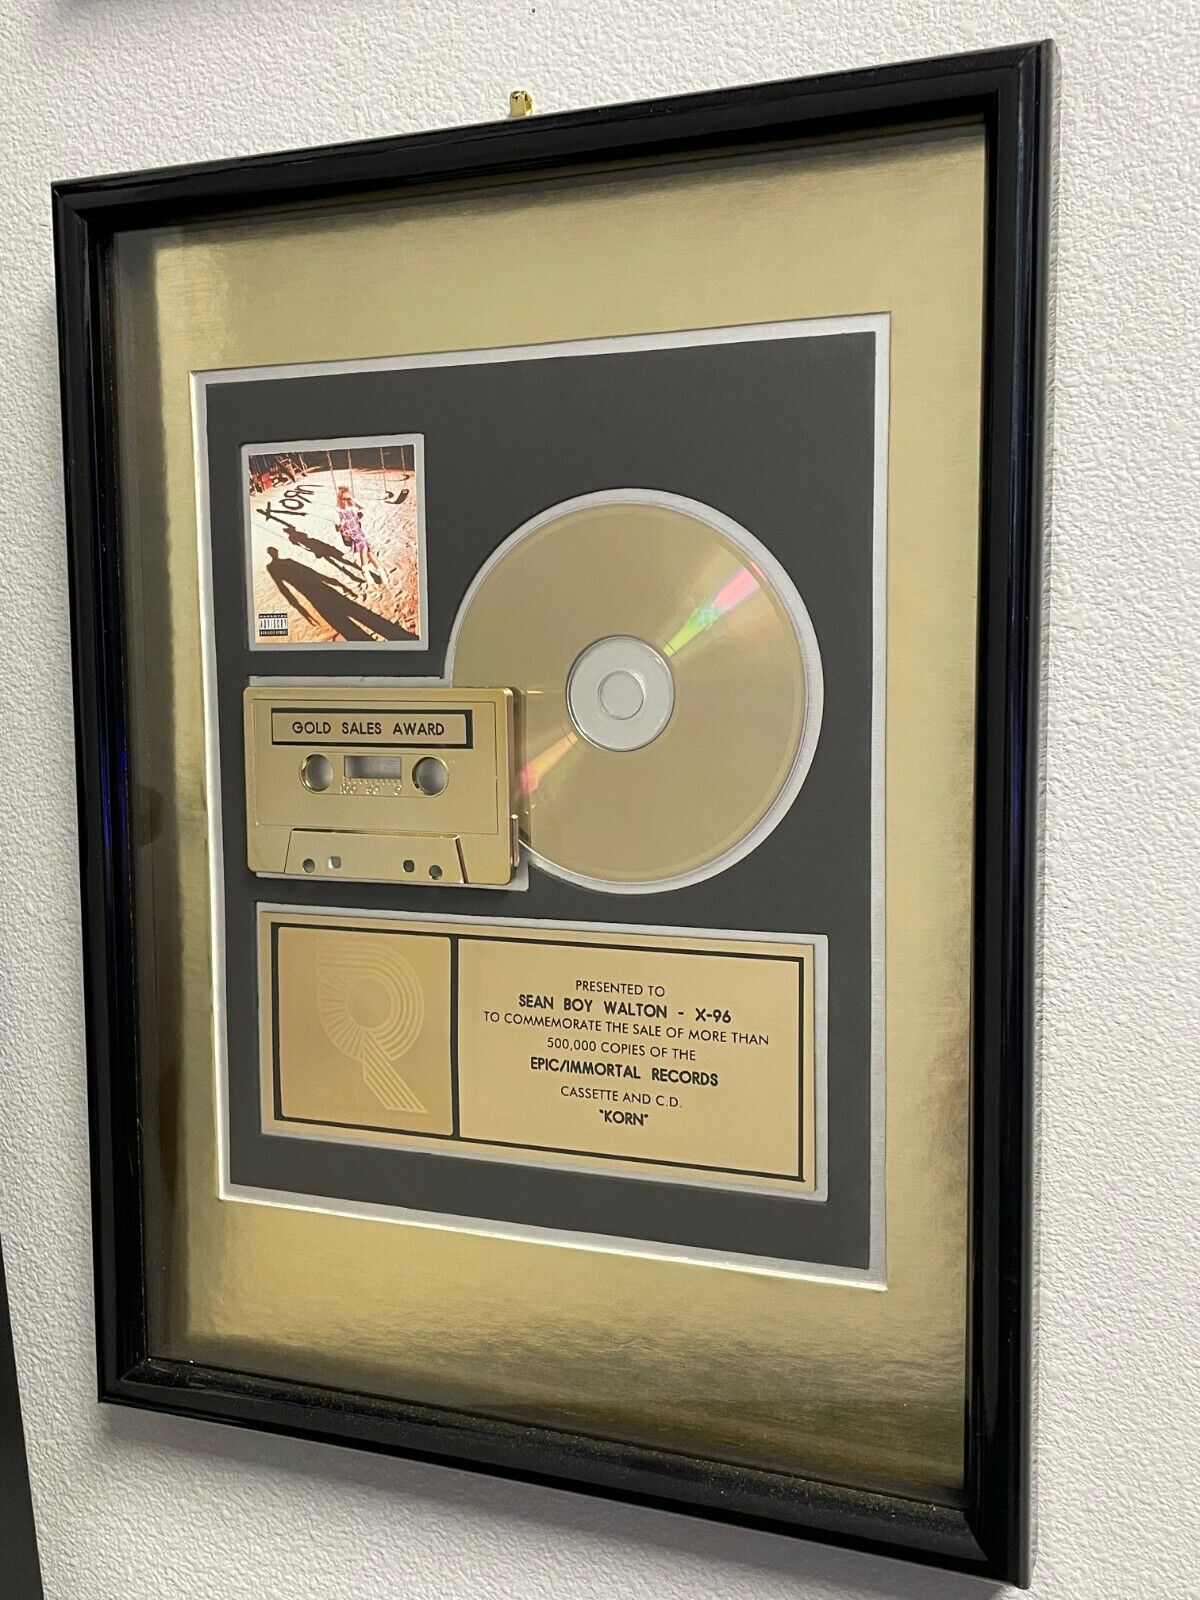 13x16.75 Framed Riaa Certified Gold Sales Award For Korn Self-titled Album